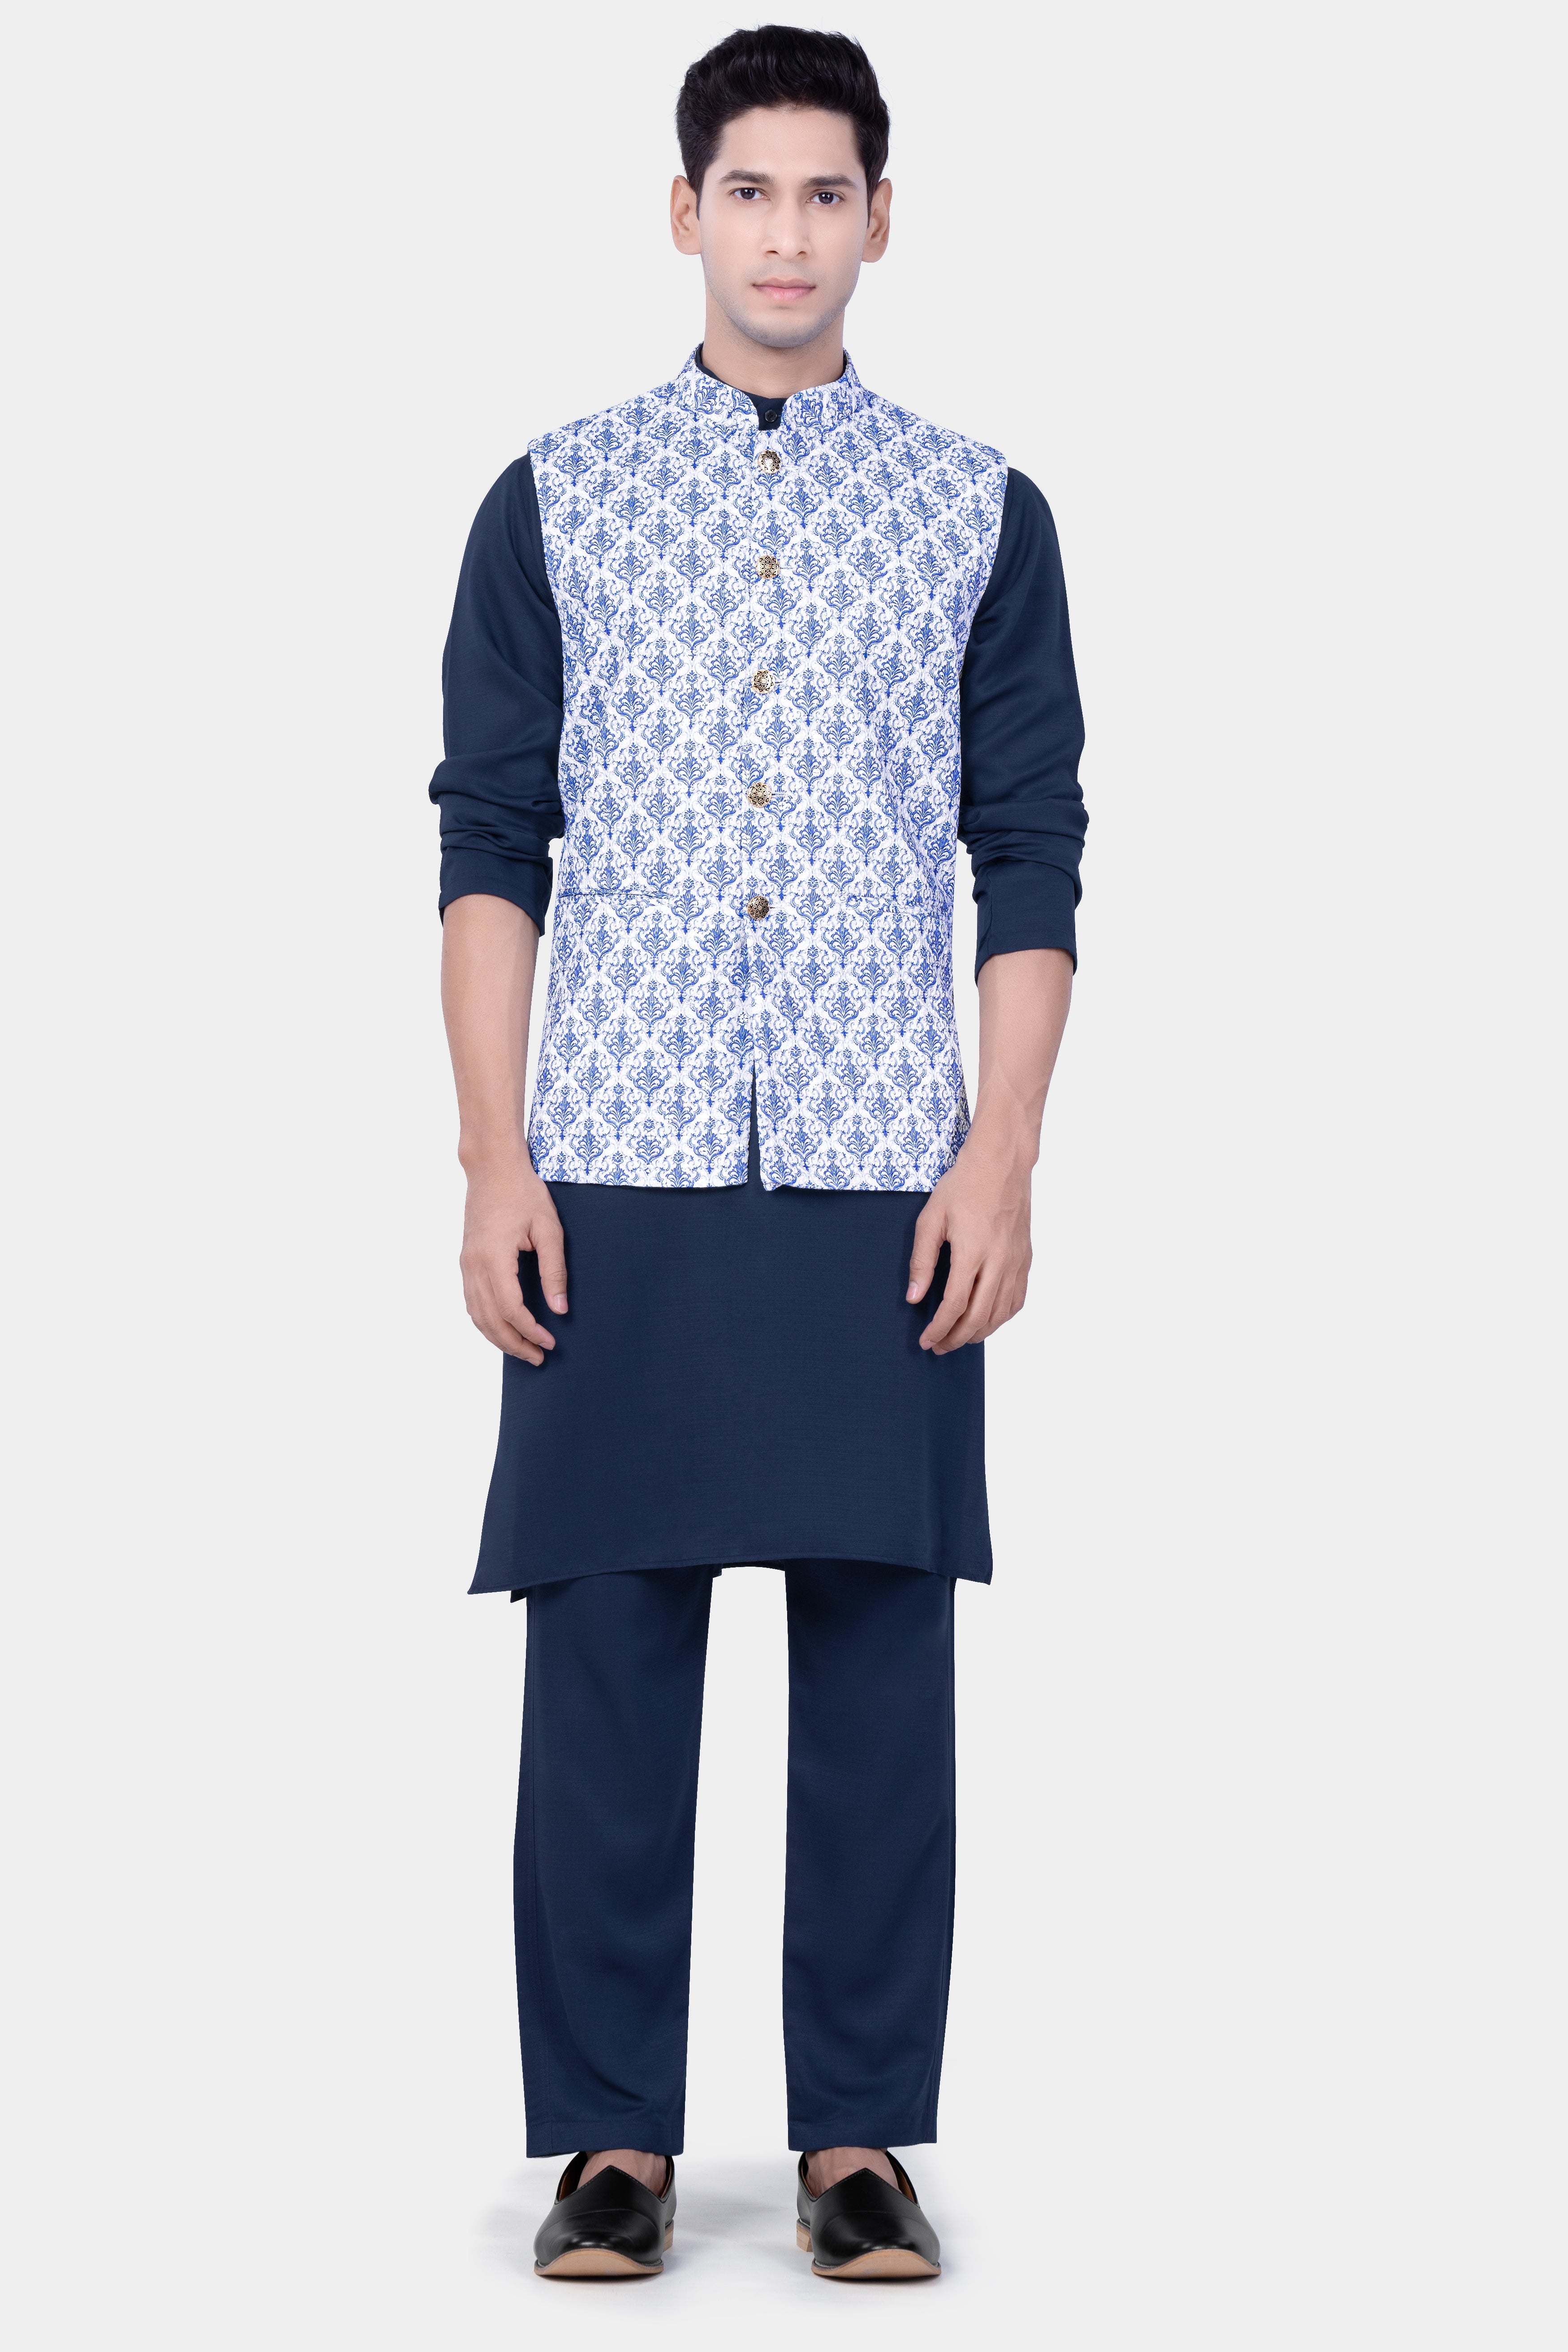 Tealish Blue And Bright White Designer Embroidered Nehru Jacket